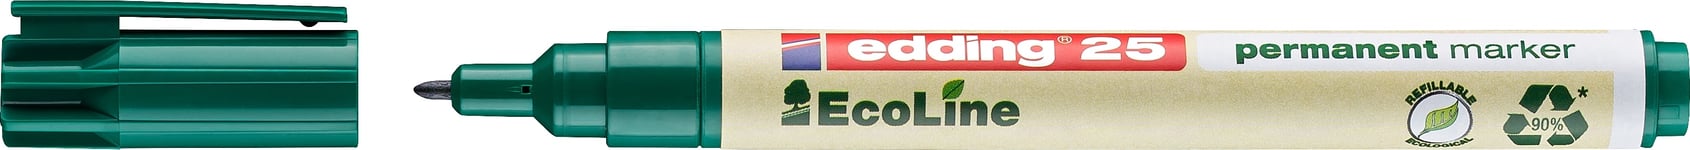 Edding 25 Ecoline Permanent Marker | Grøn